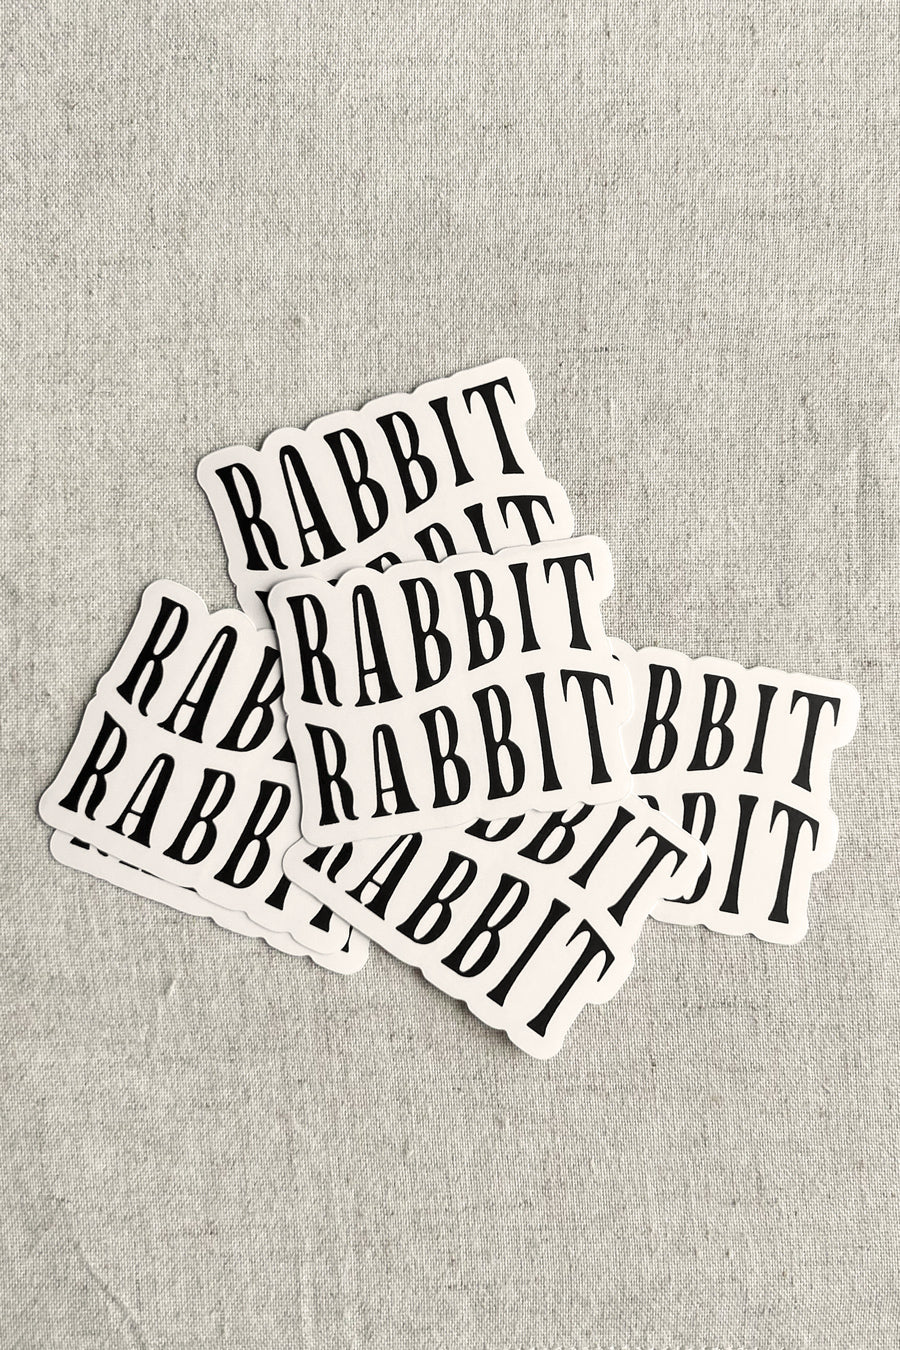 Rabbit Rabbit Sticker